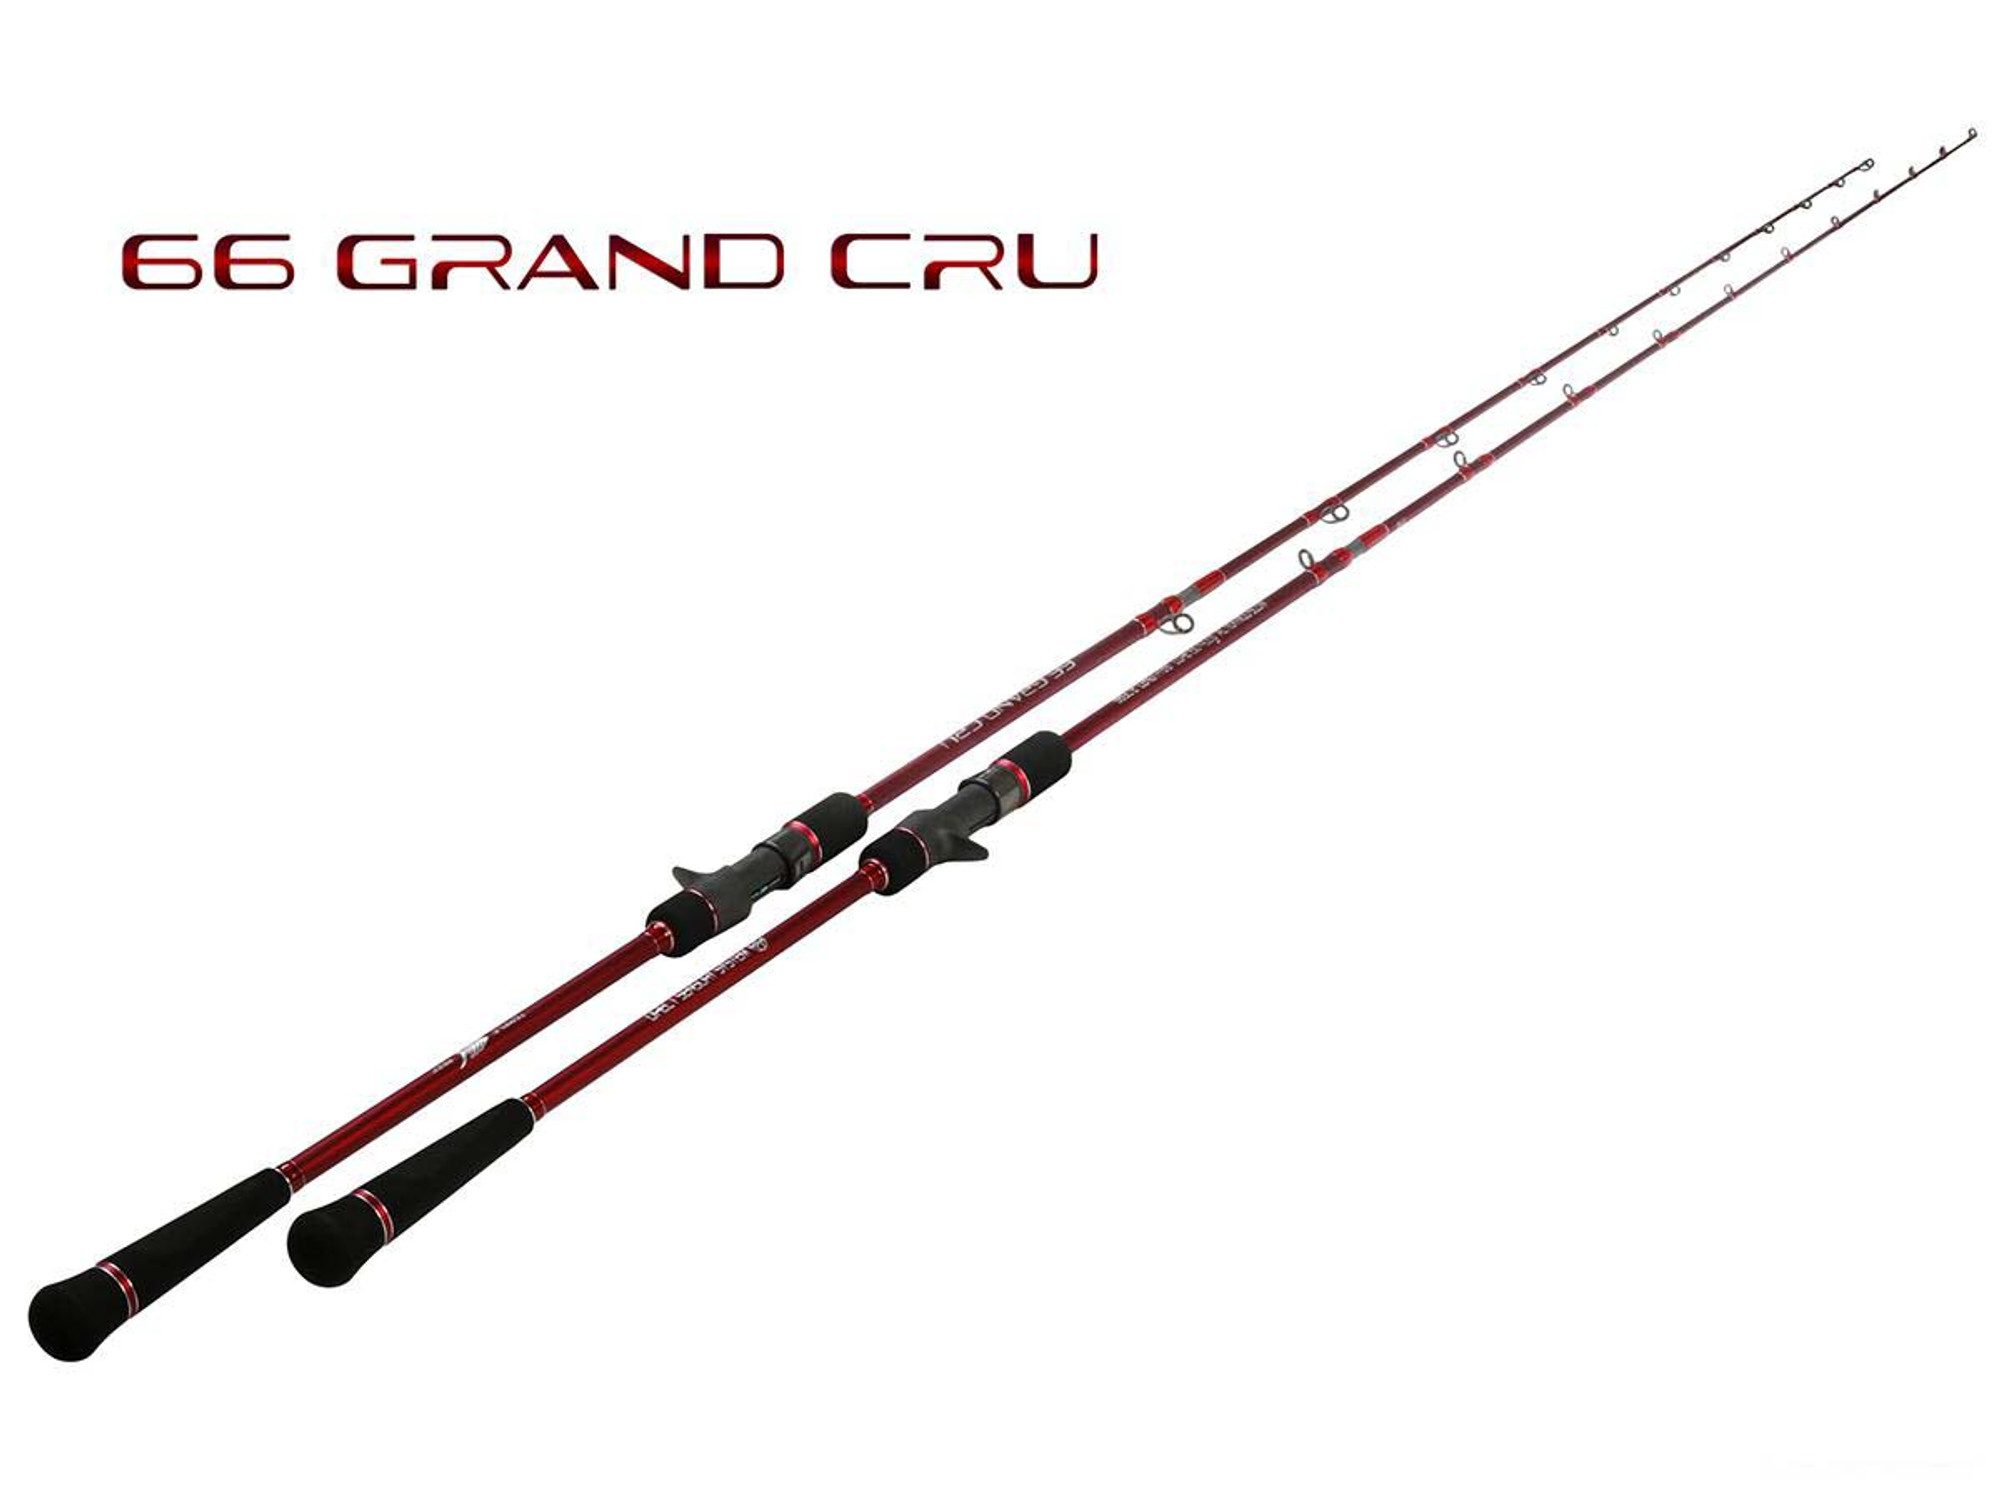 Temple Reef Grand Cru Slow Pitch Jig Fishing Rod (Model: 66GC-1)